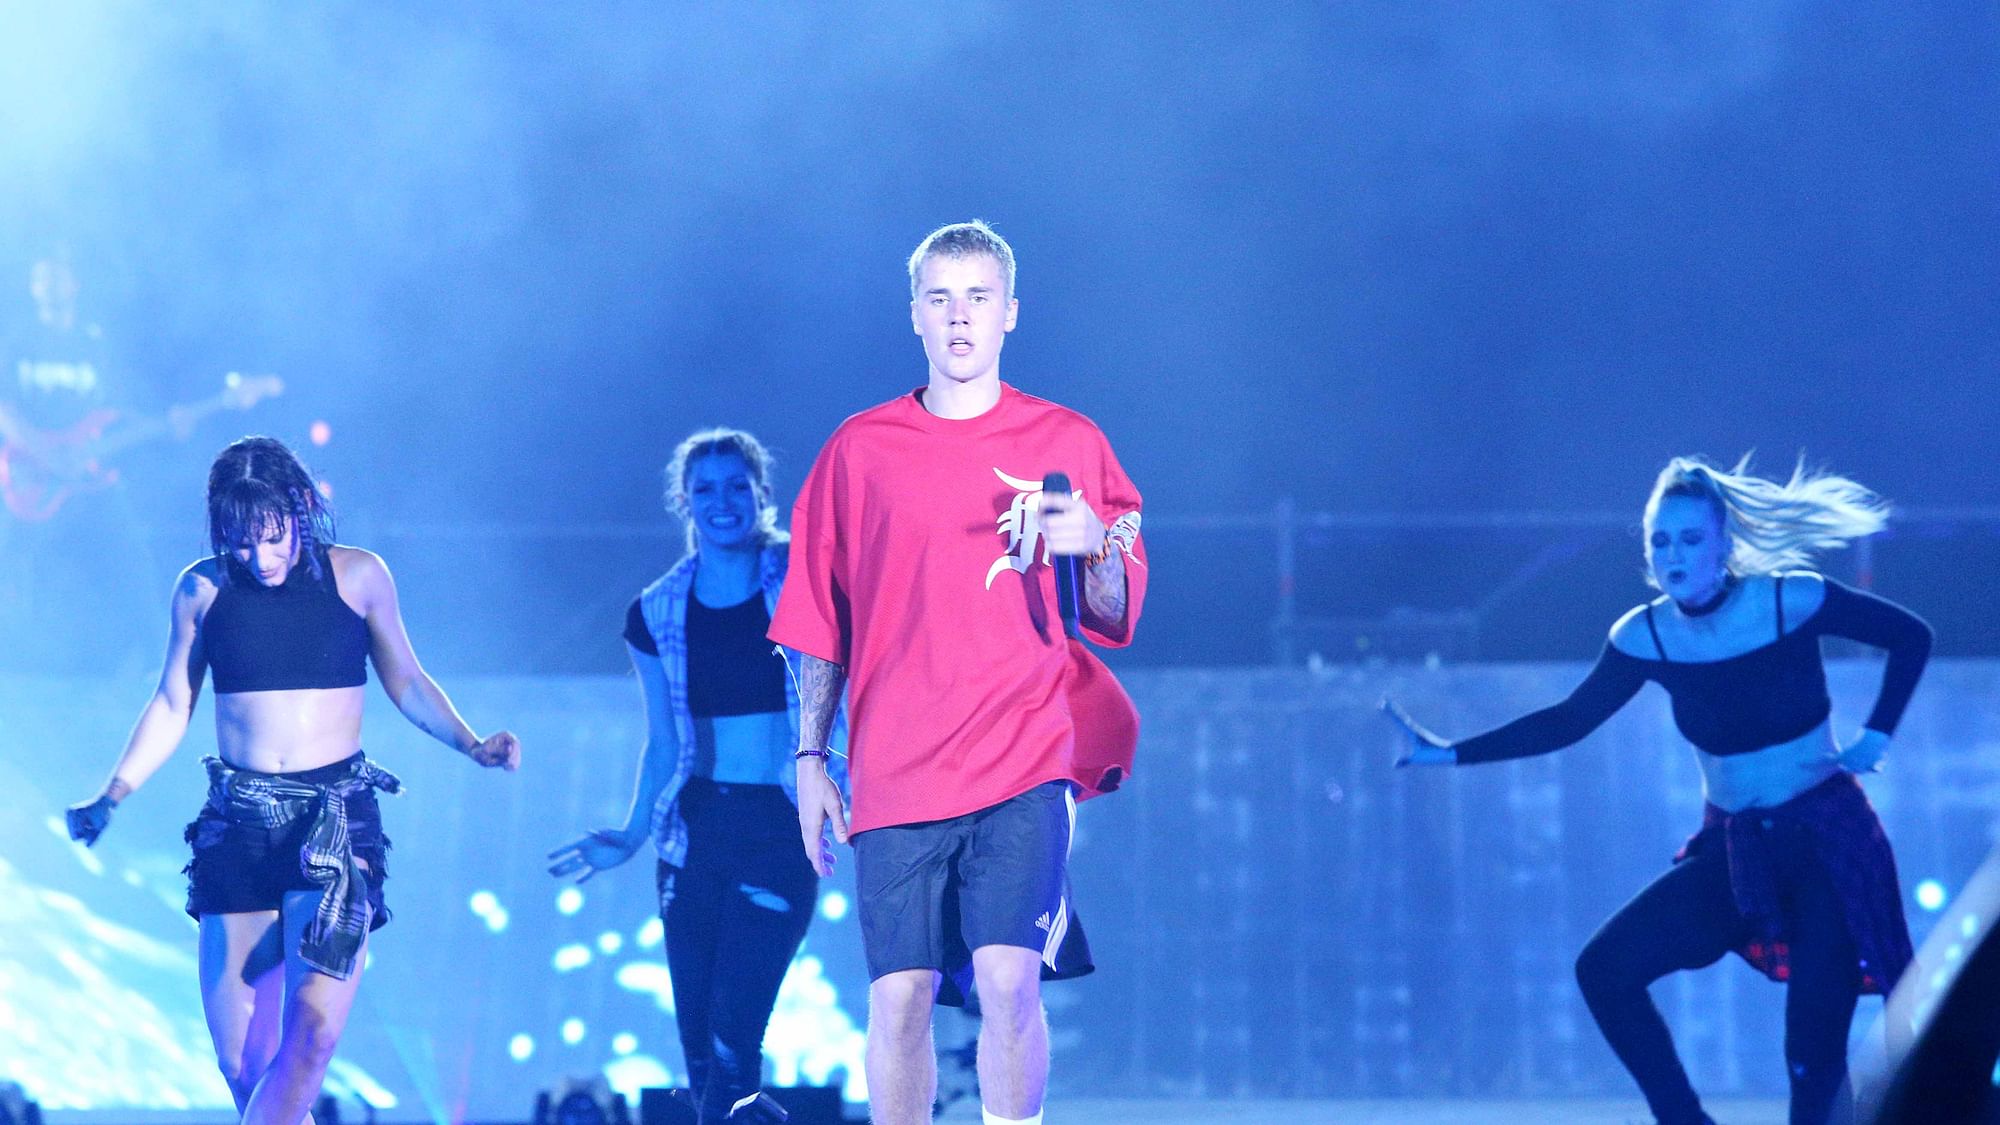 Justin Bieber performs on stage. (Photo: Yogen Shah)